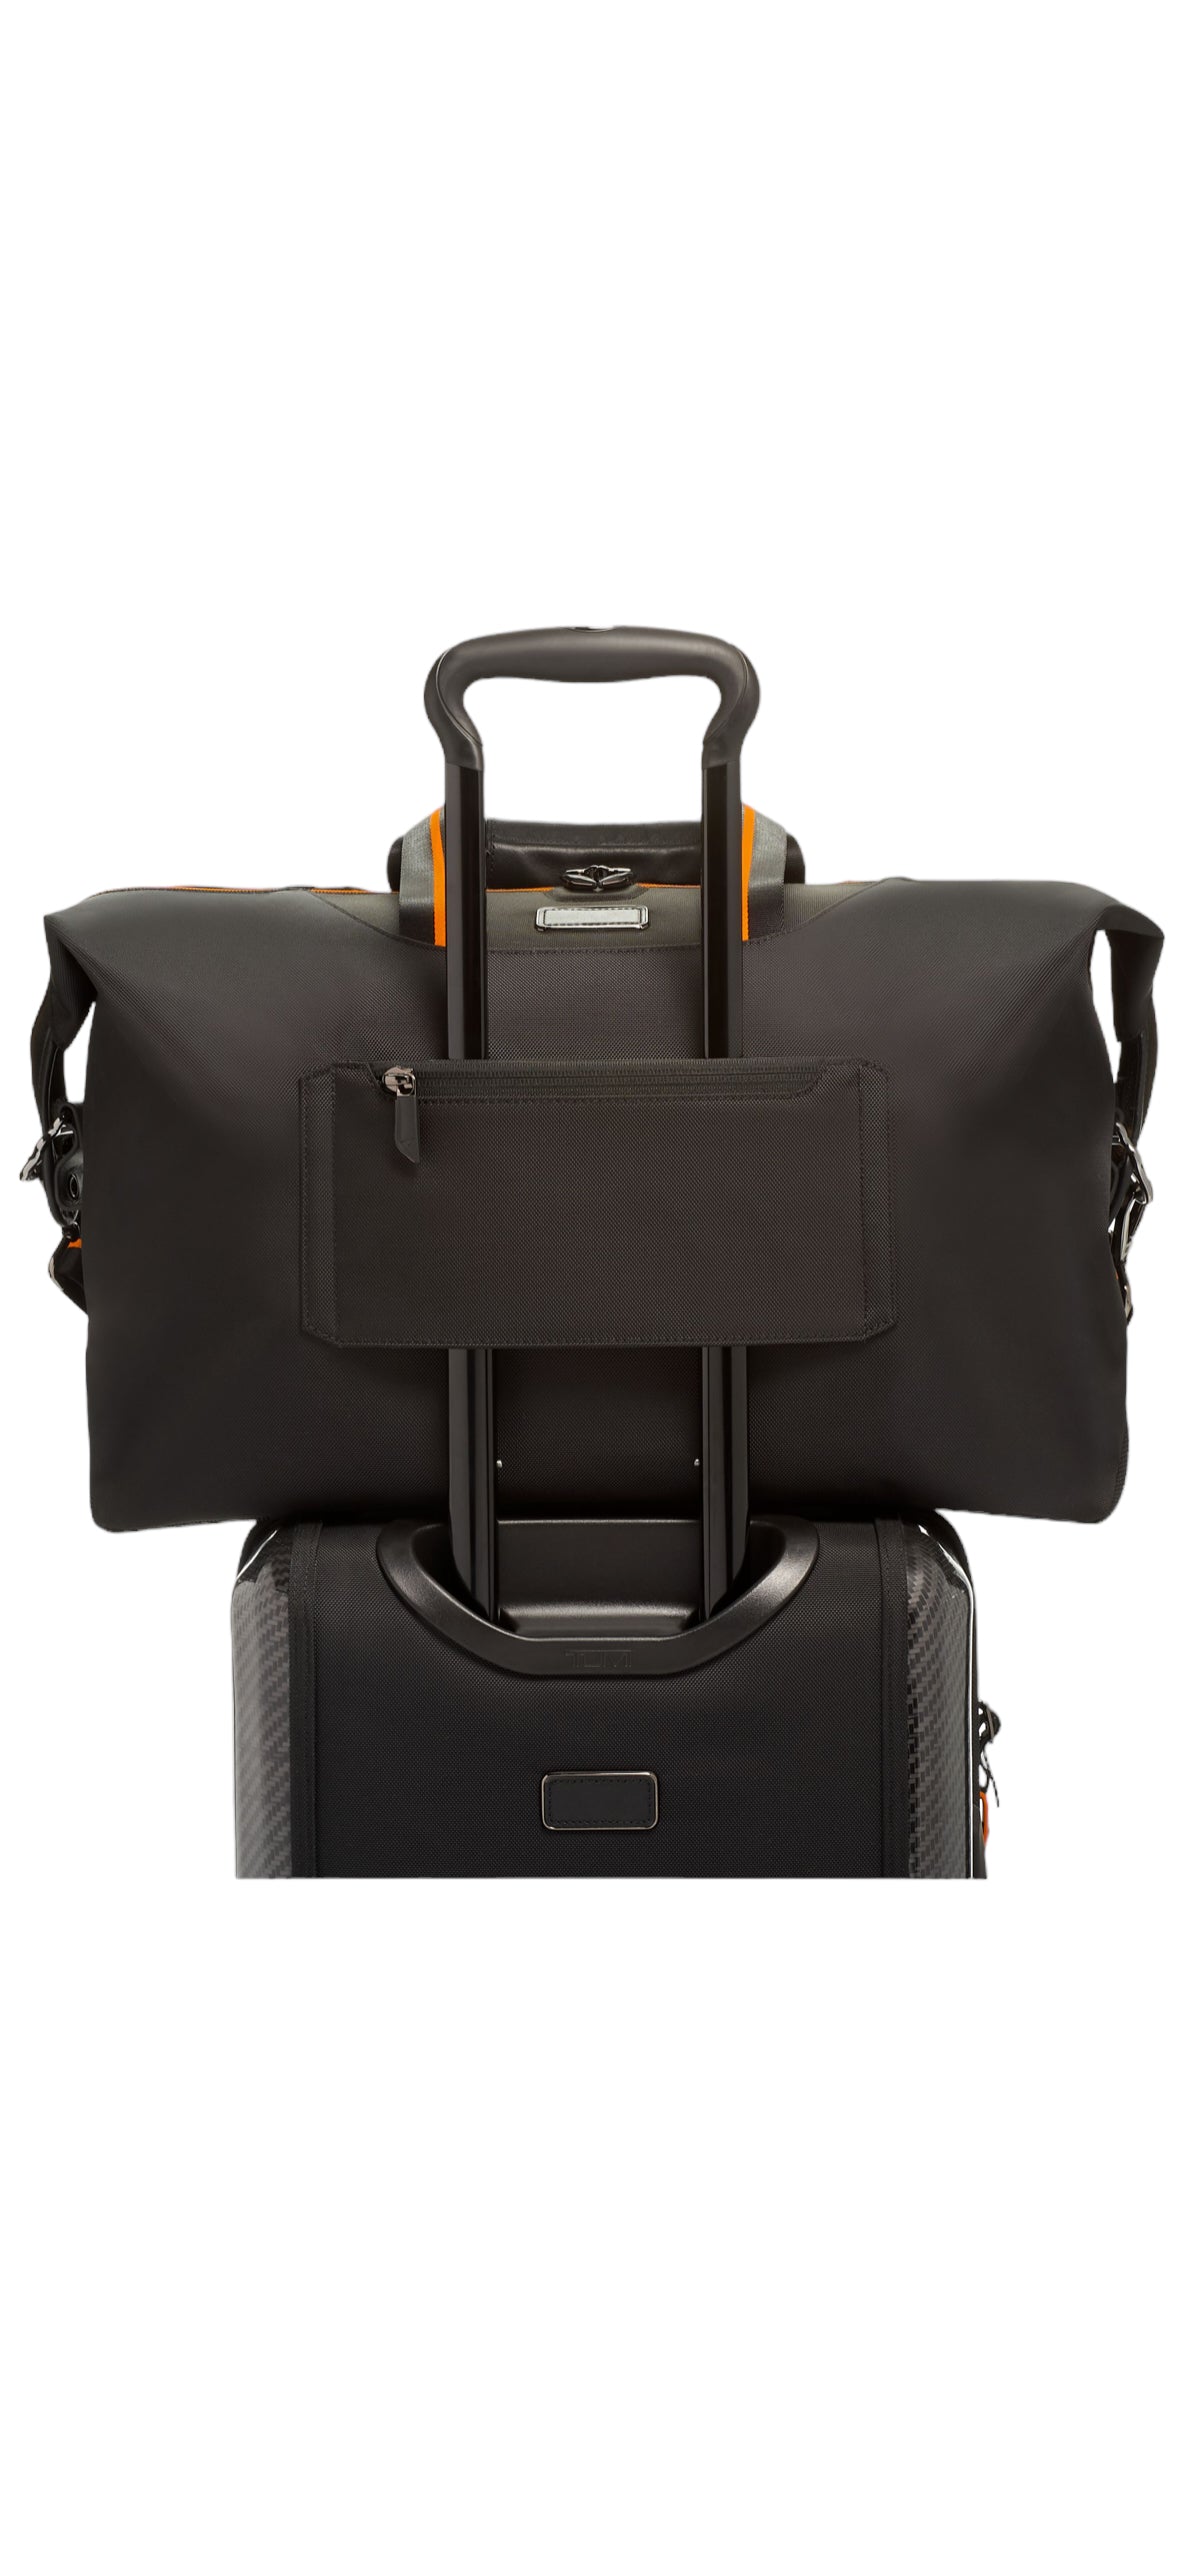 Tumi x Mclaren Black Orange M-Tech Soft Satchel Ballistic Nylon Carryall Travel Tote Bag